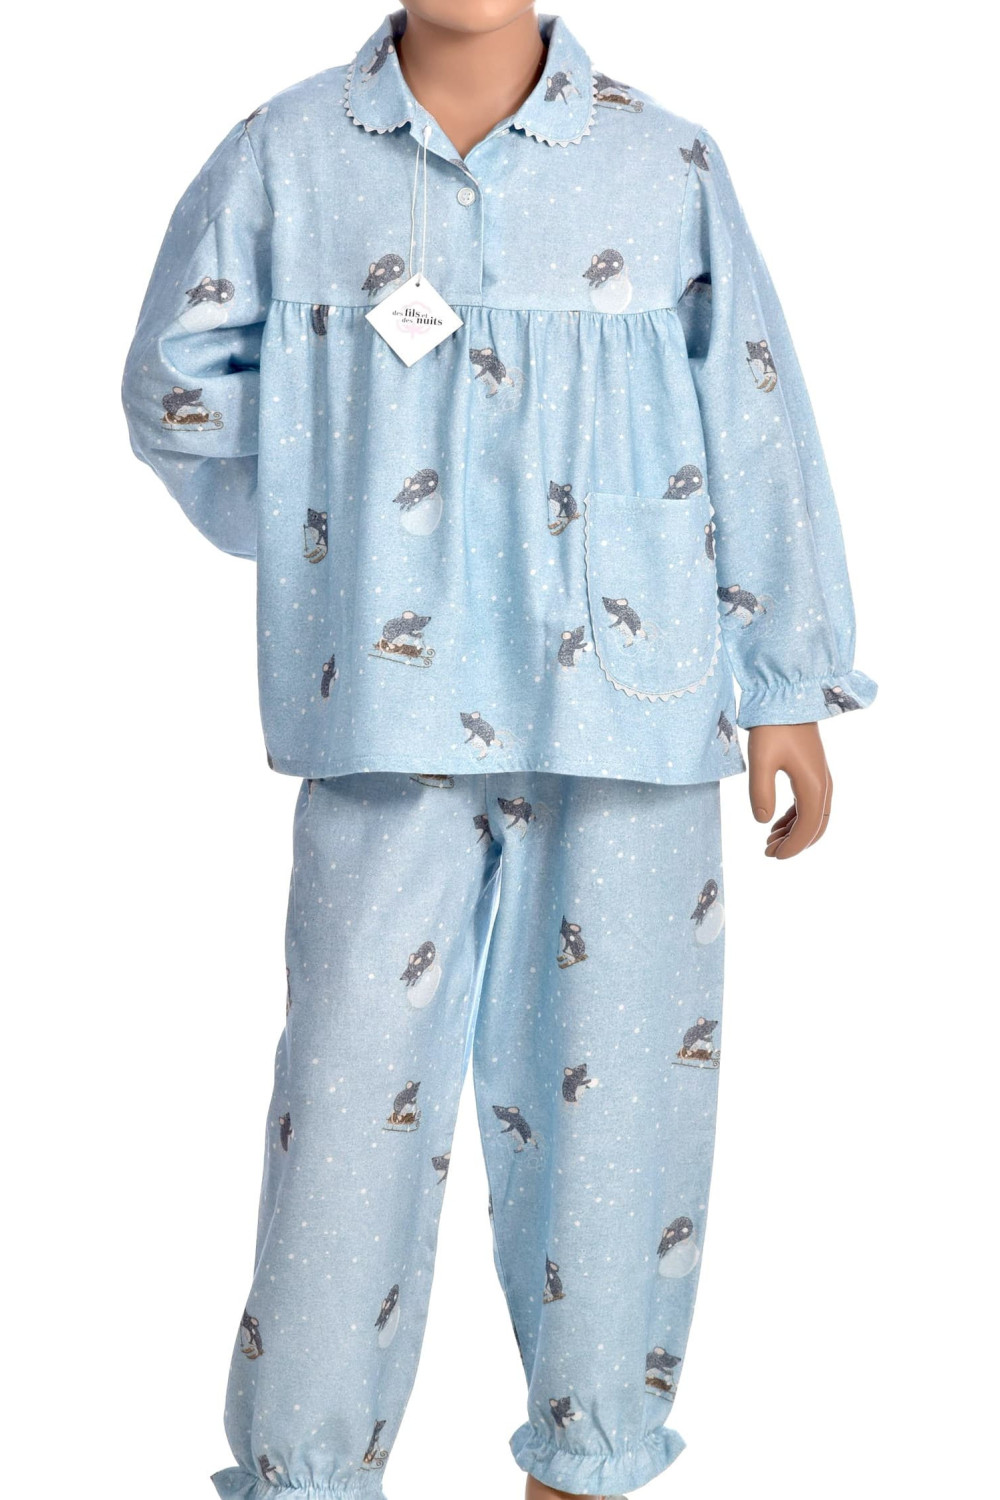 Pyjama pilou pilou fille - Tissaia - 5 ans